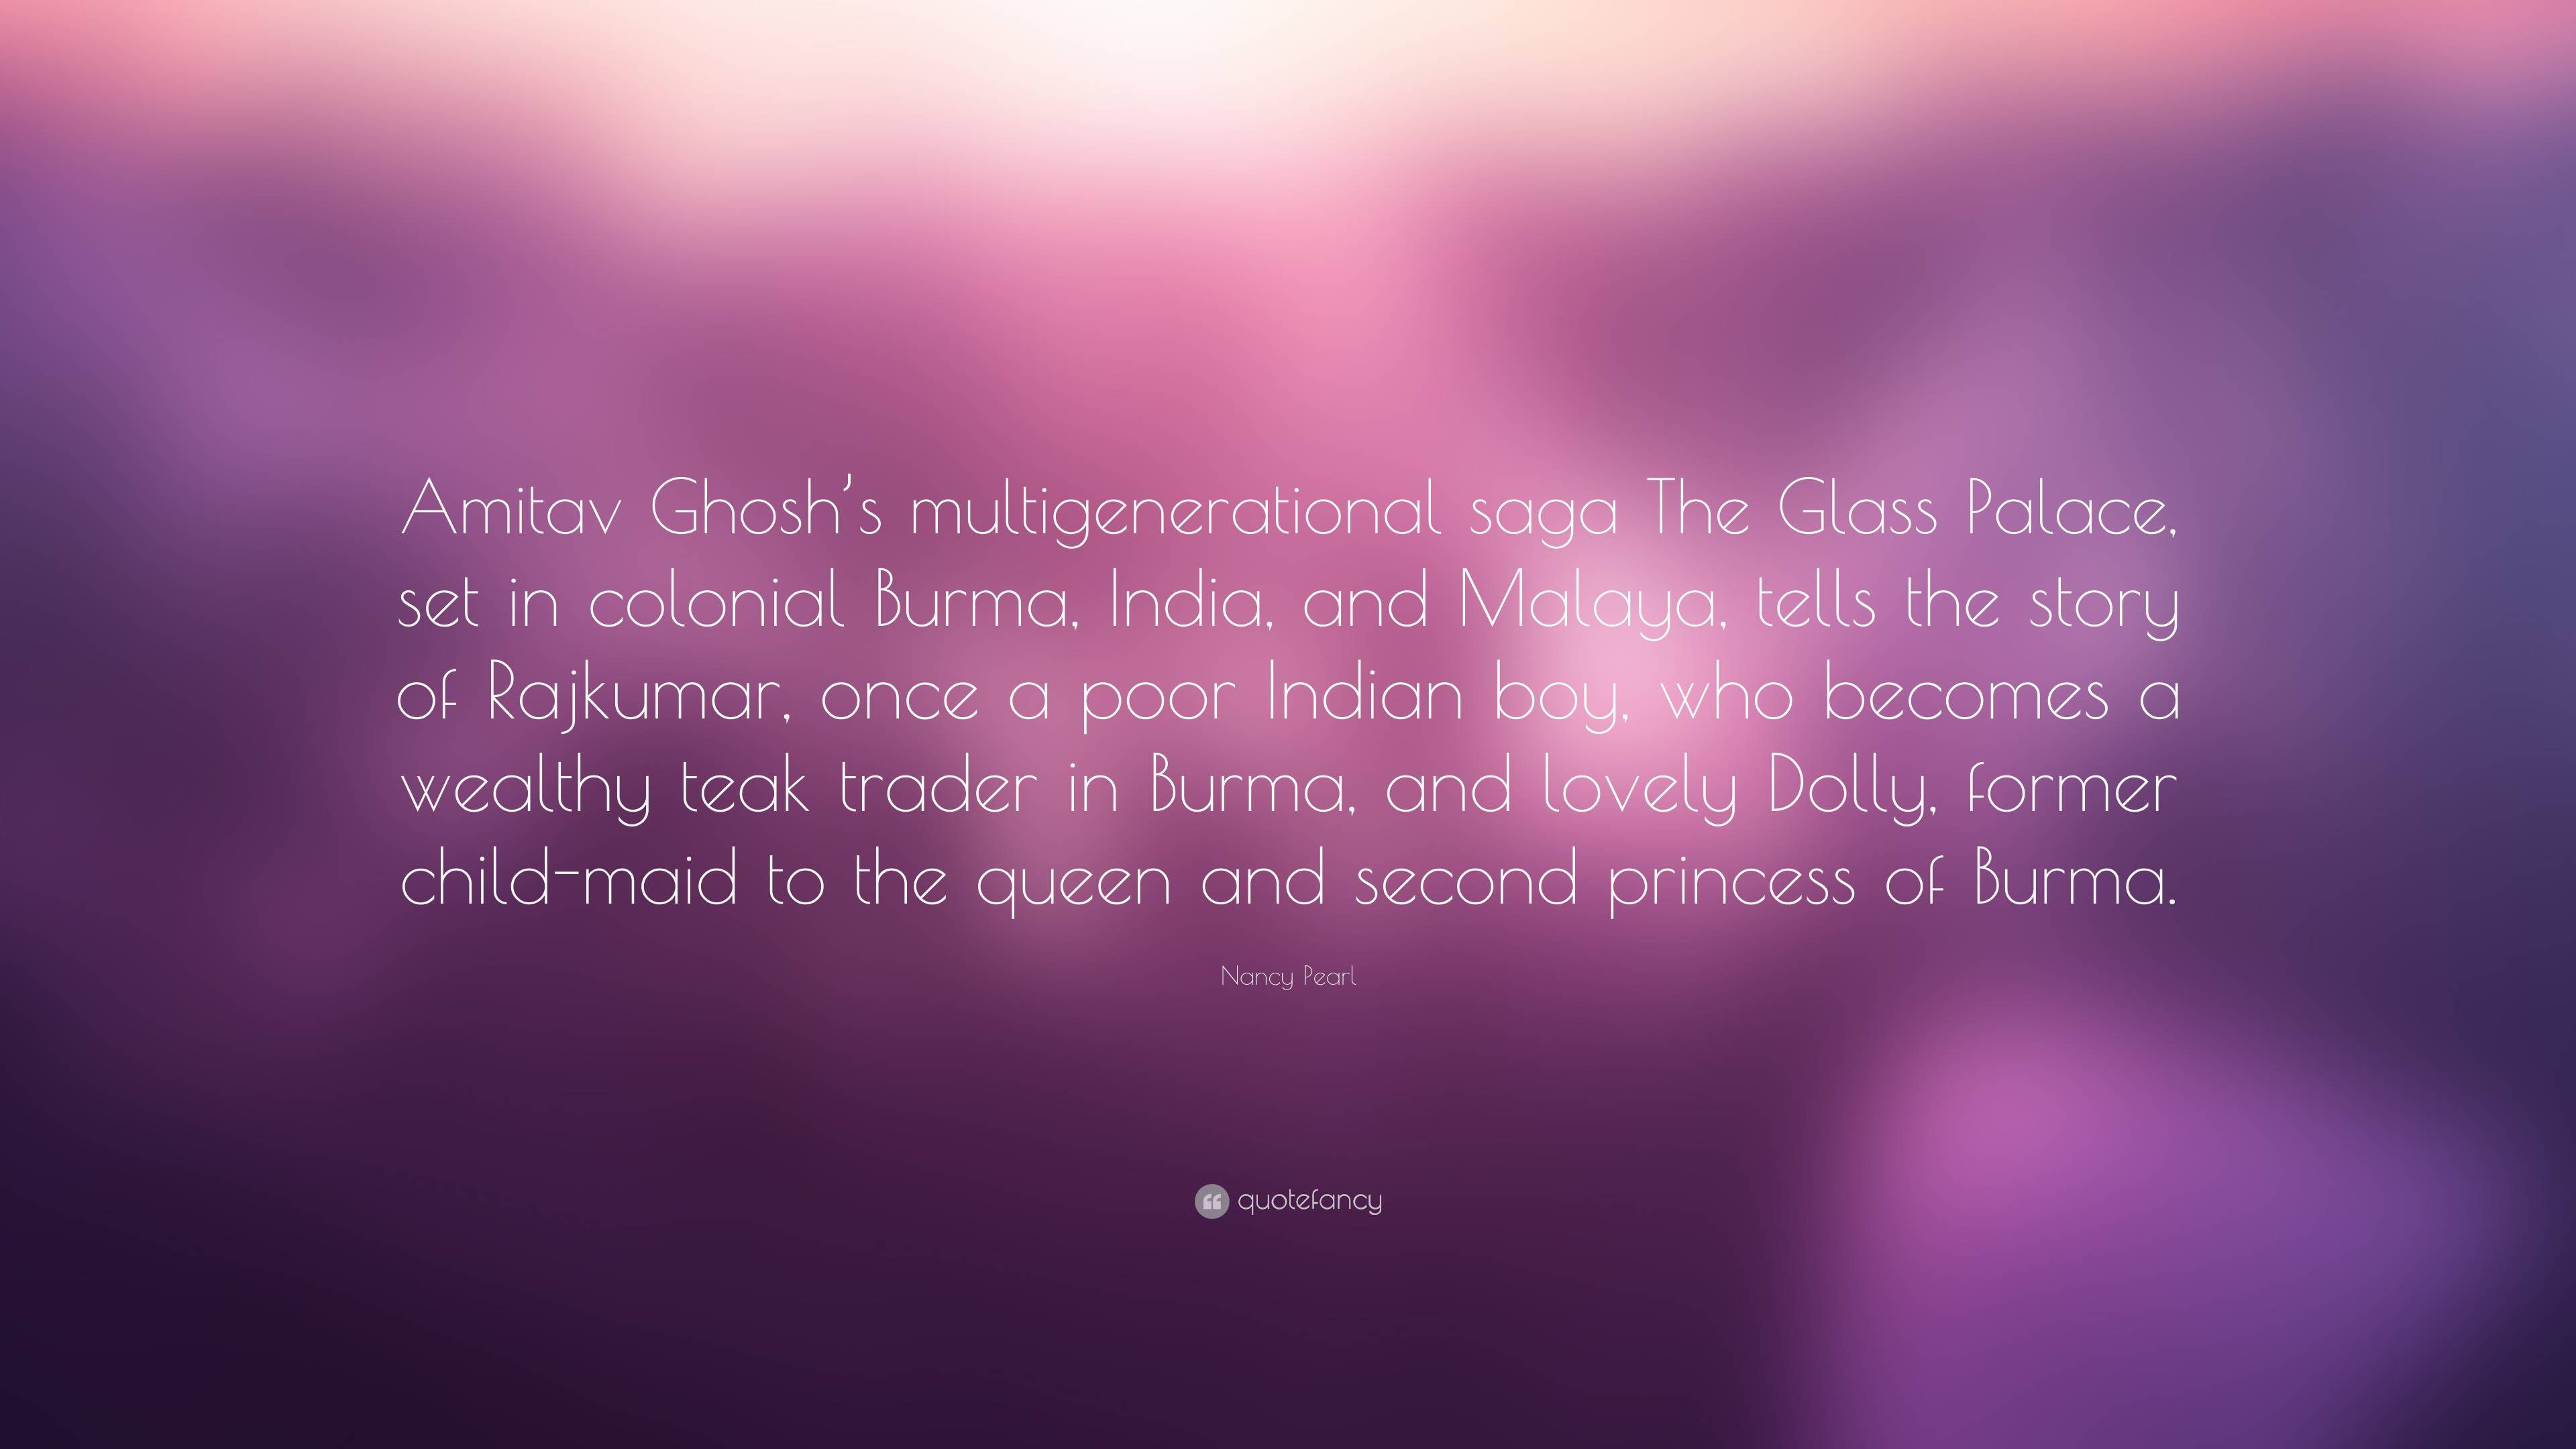 The Glass Palace: A Novel by Ghosh, Amitav